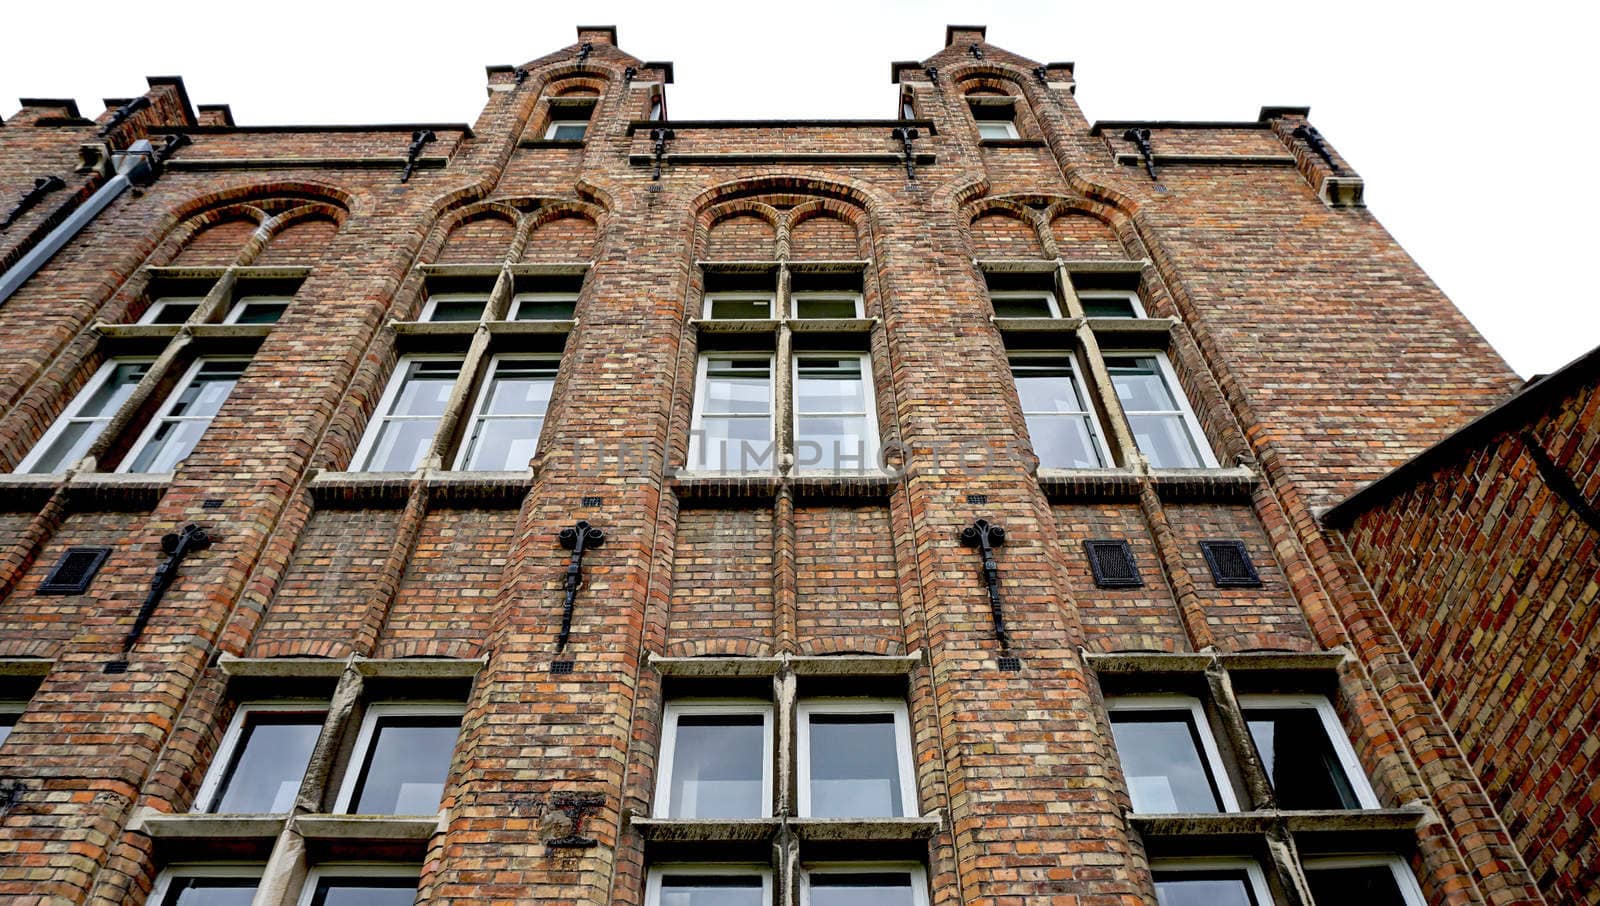 Historical facade in Brugge Belgium by polarbearstudio